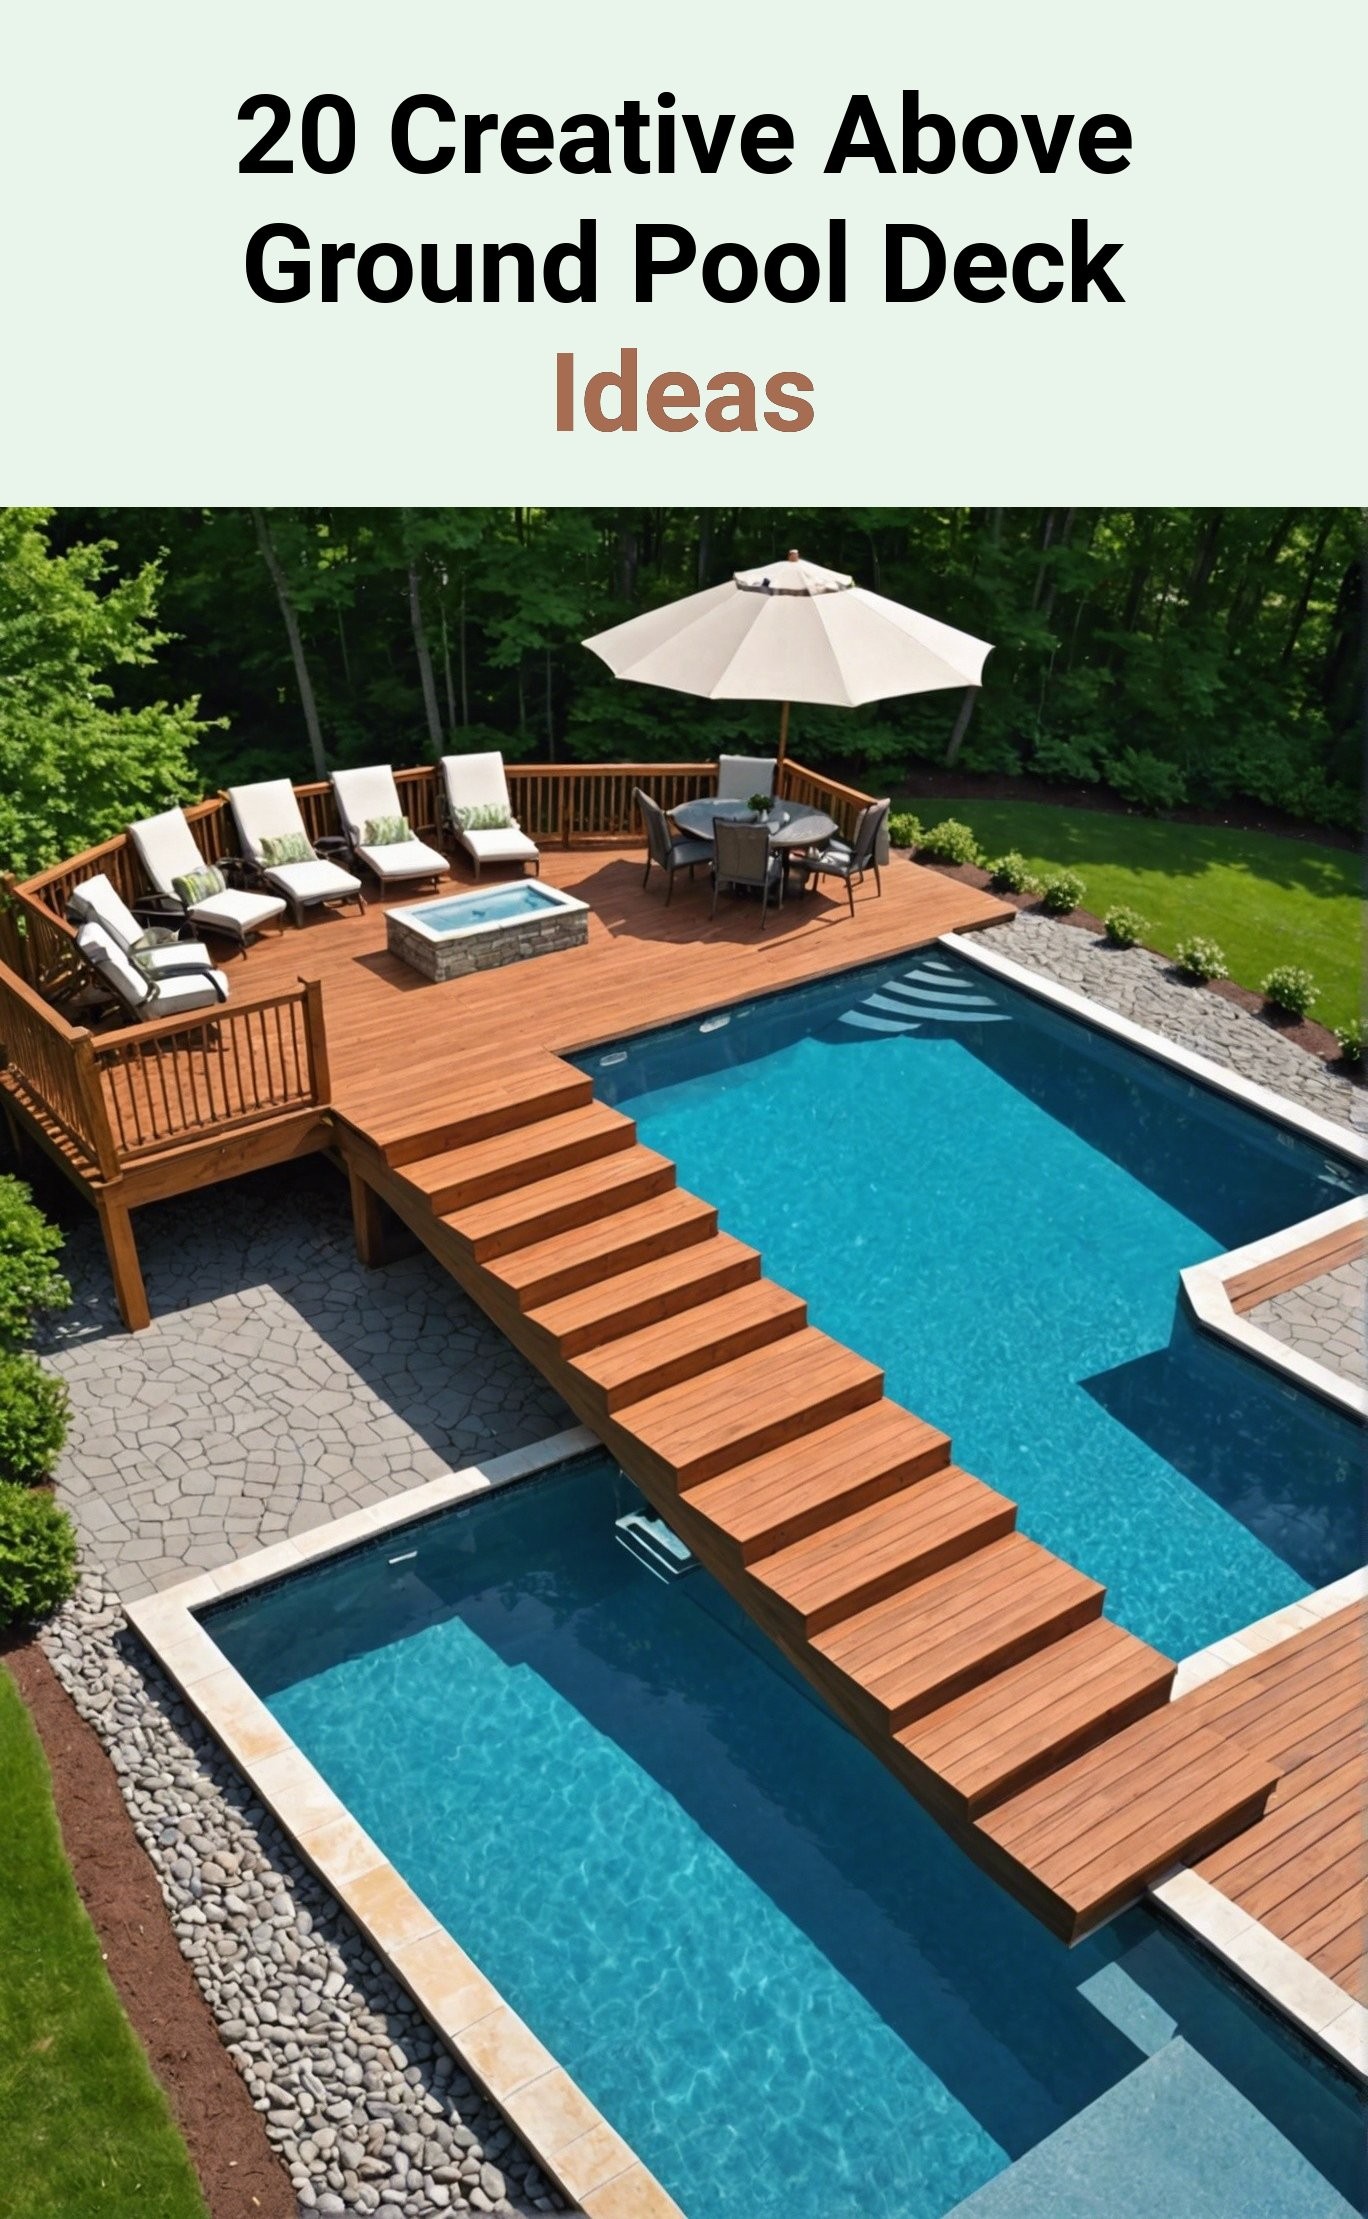 20 Creative Above Ground Pool Deck Ideas